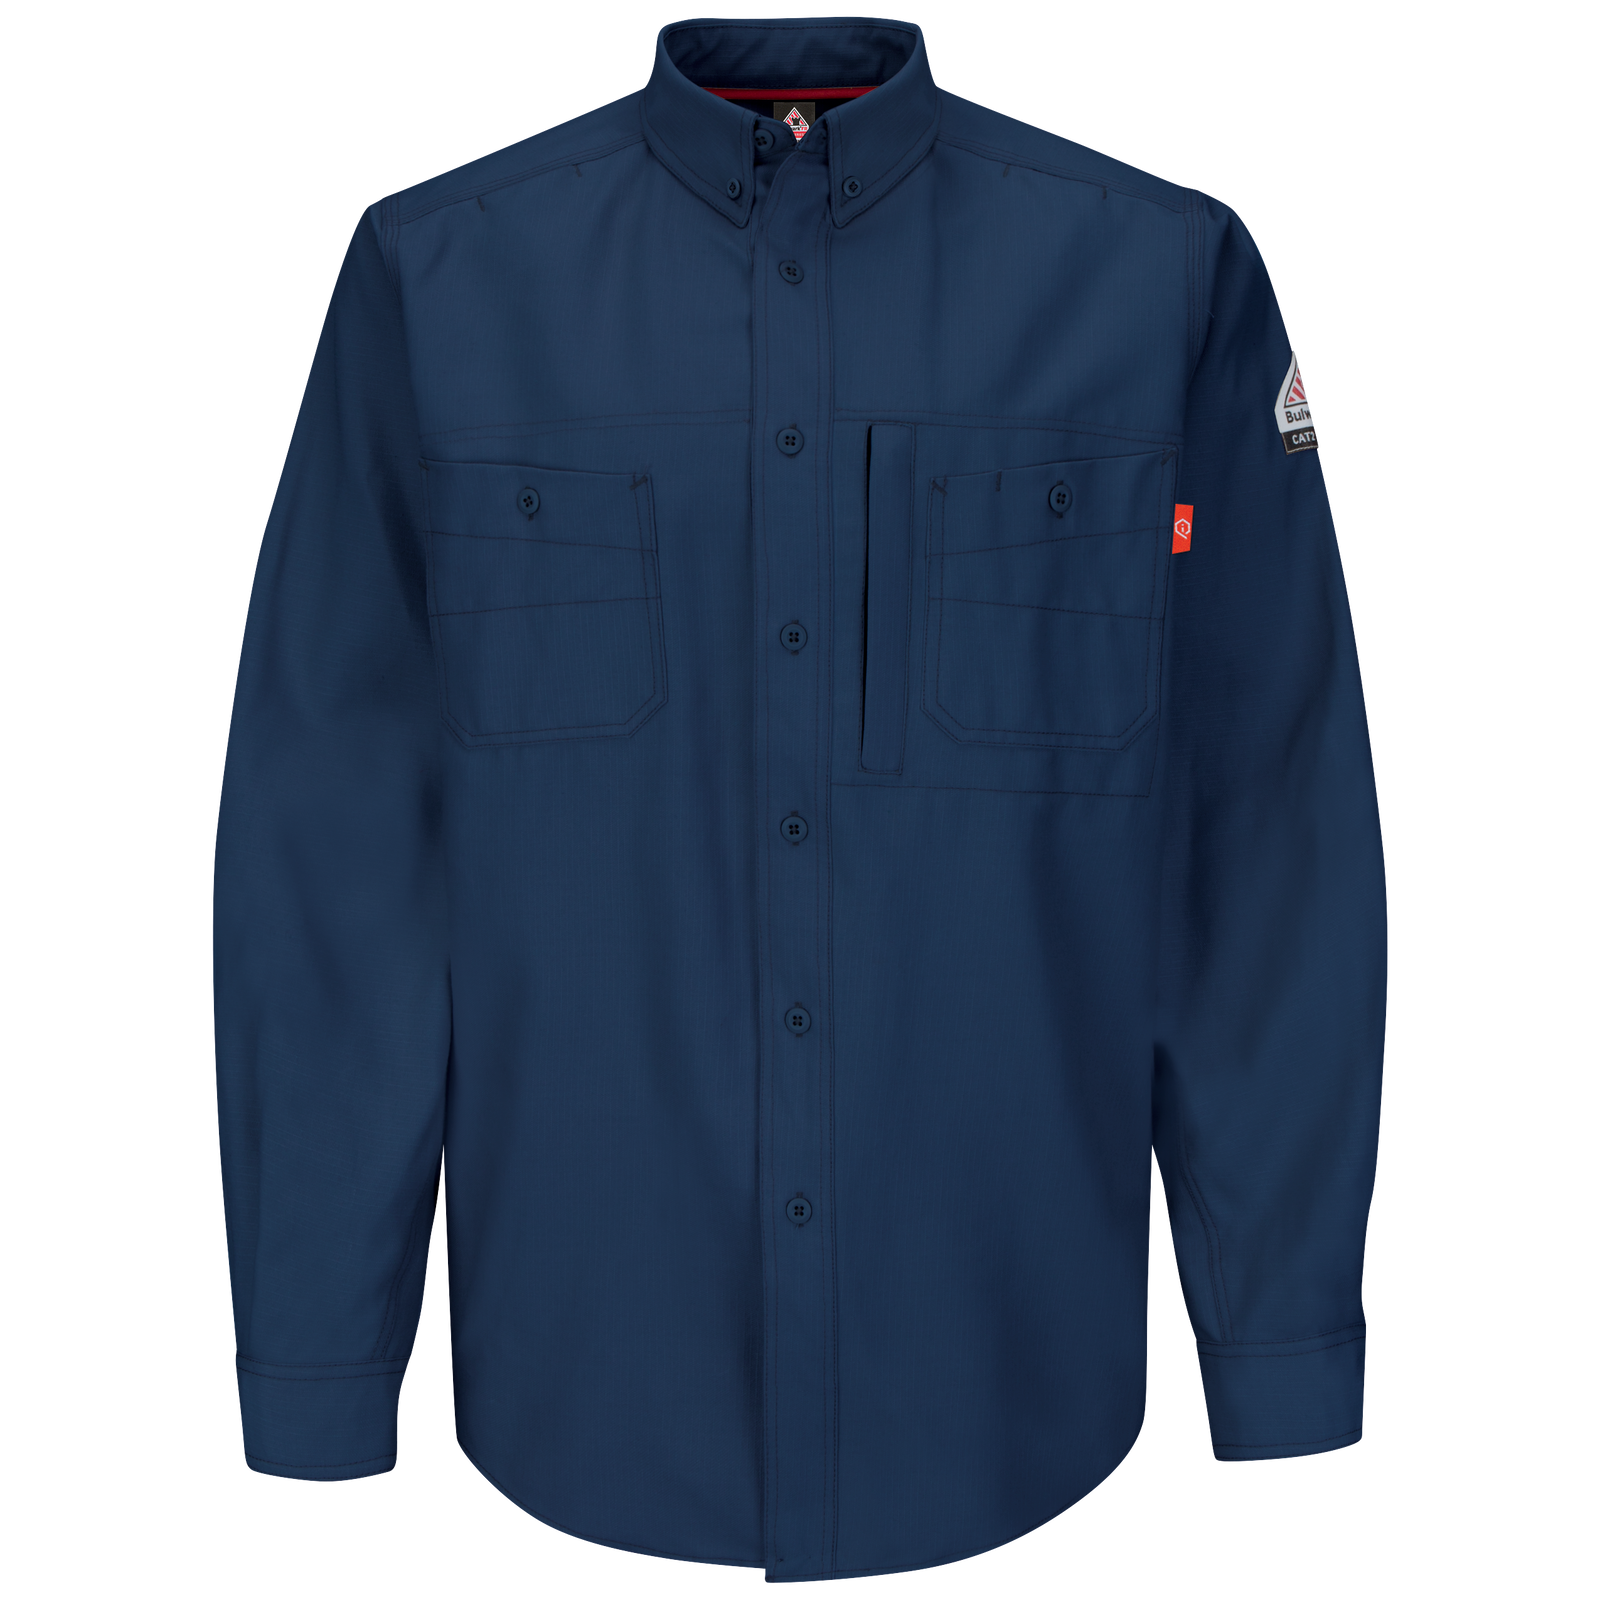 IQ Series Endurance Collection Men's FR Uniform Shirt in Navy